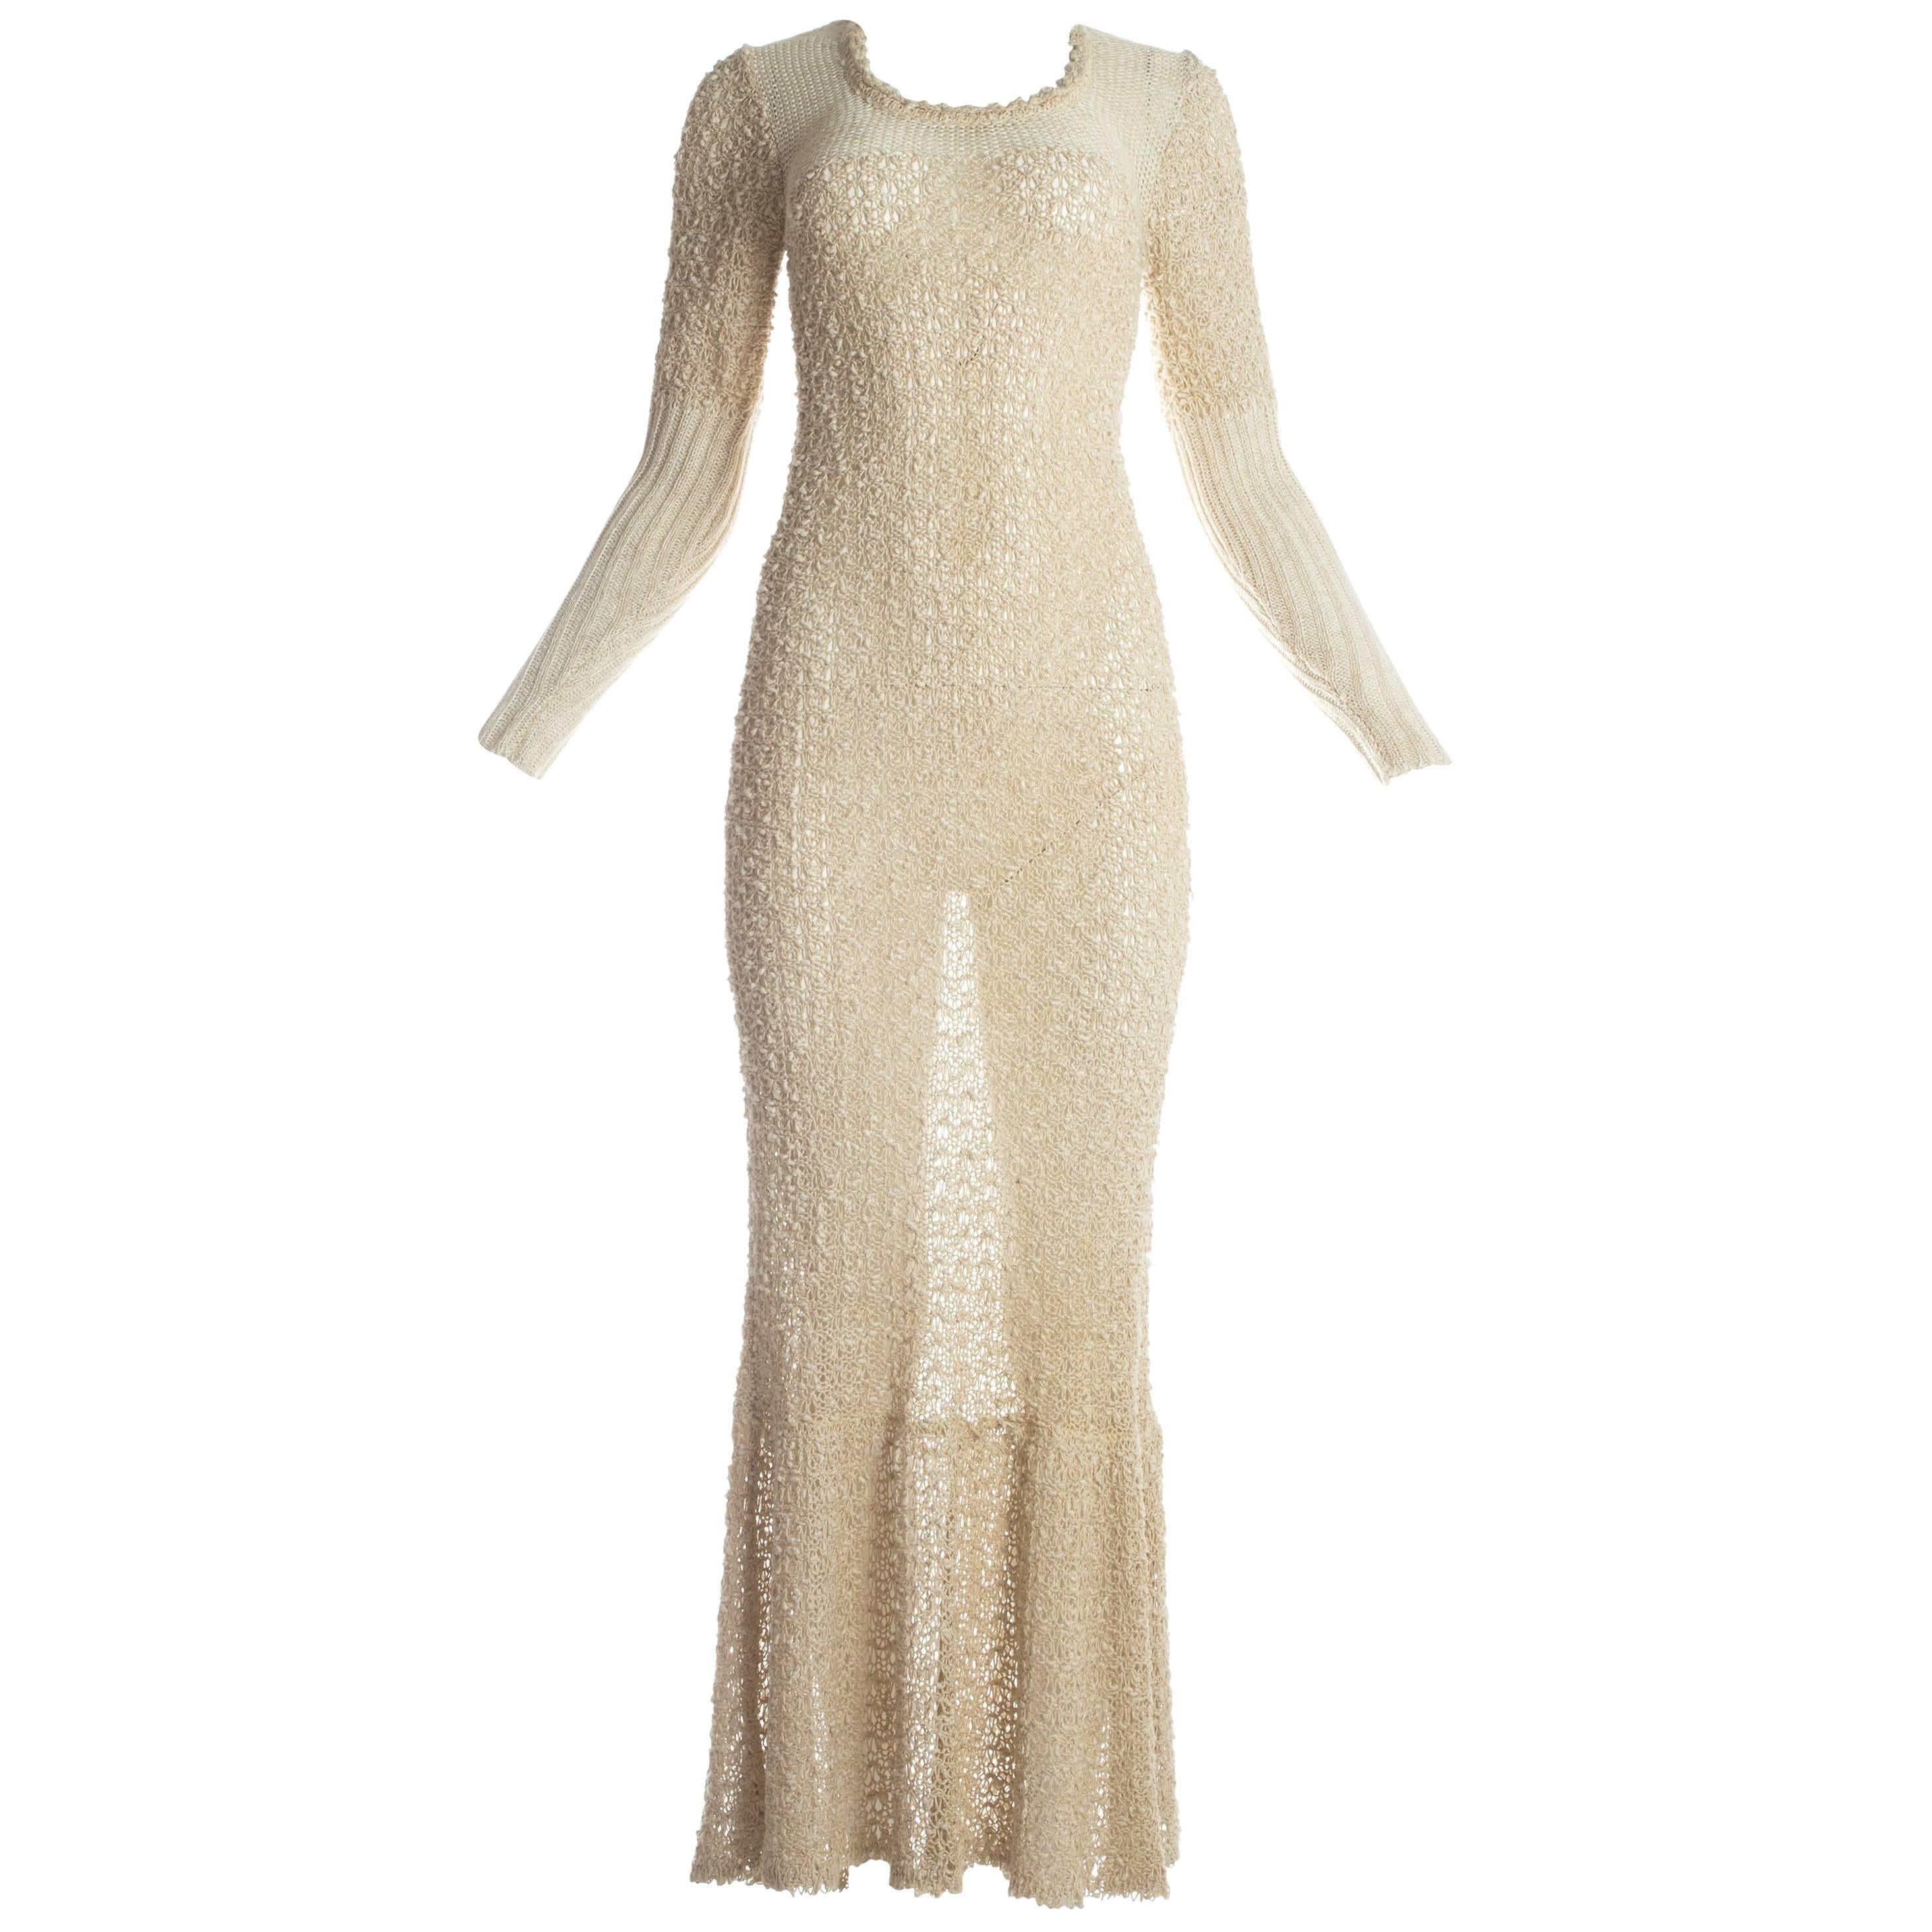 Hand loomed Irish linen summer maxi dress, c. 1970